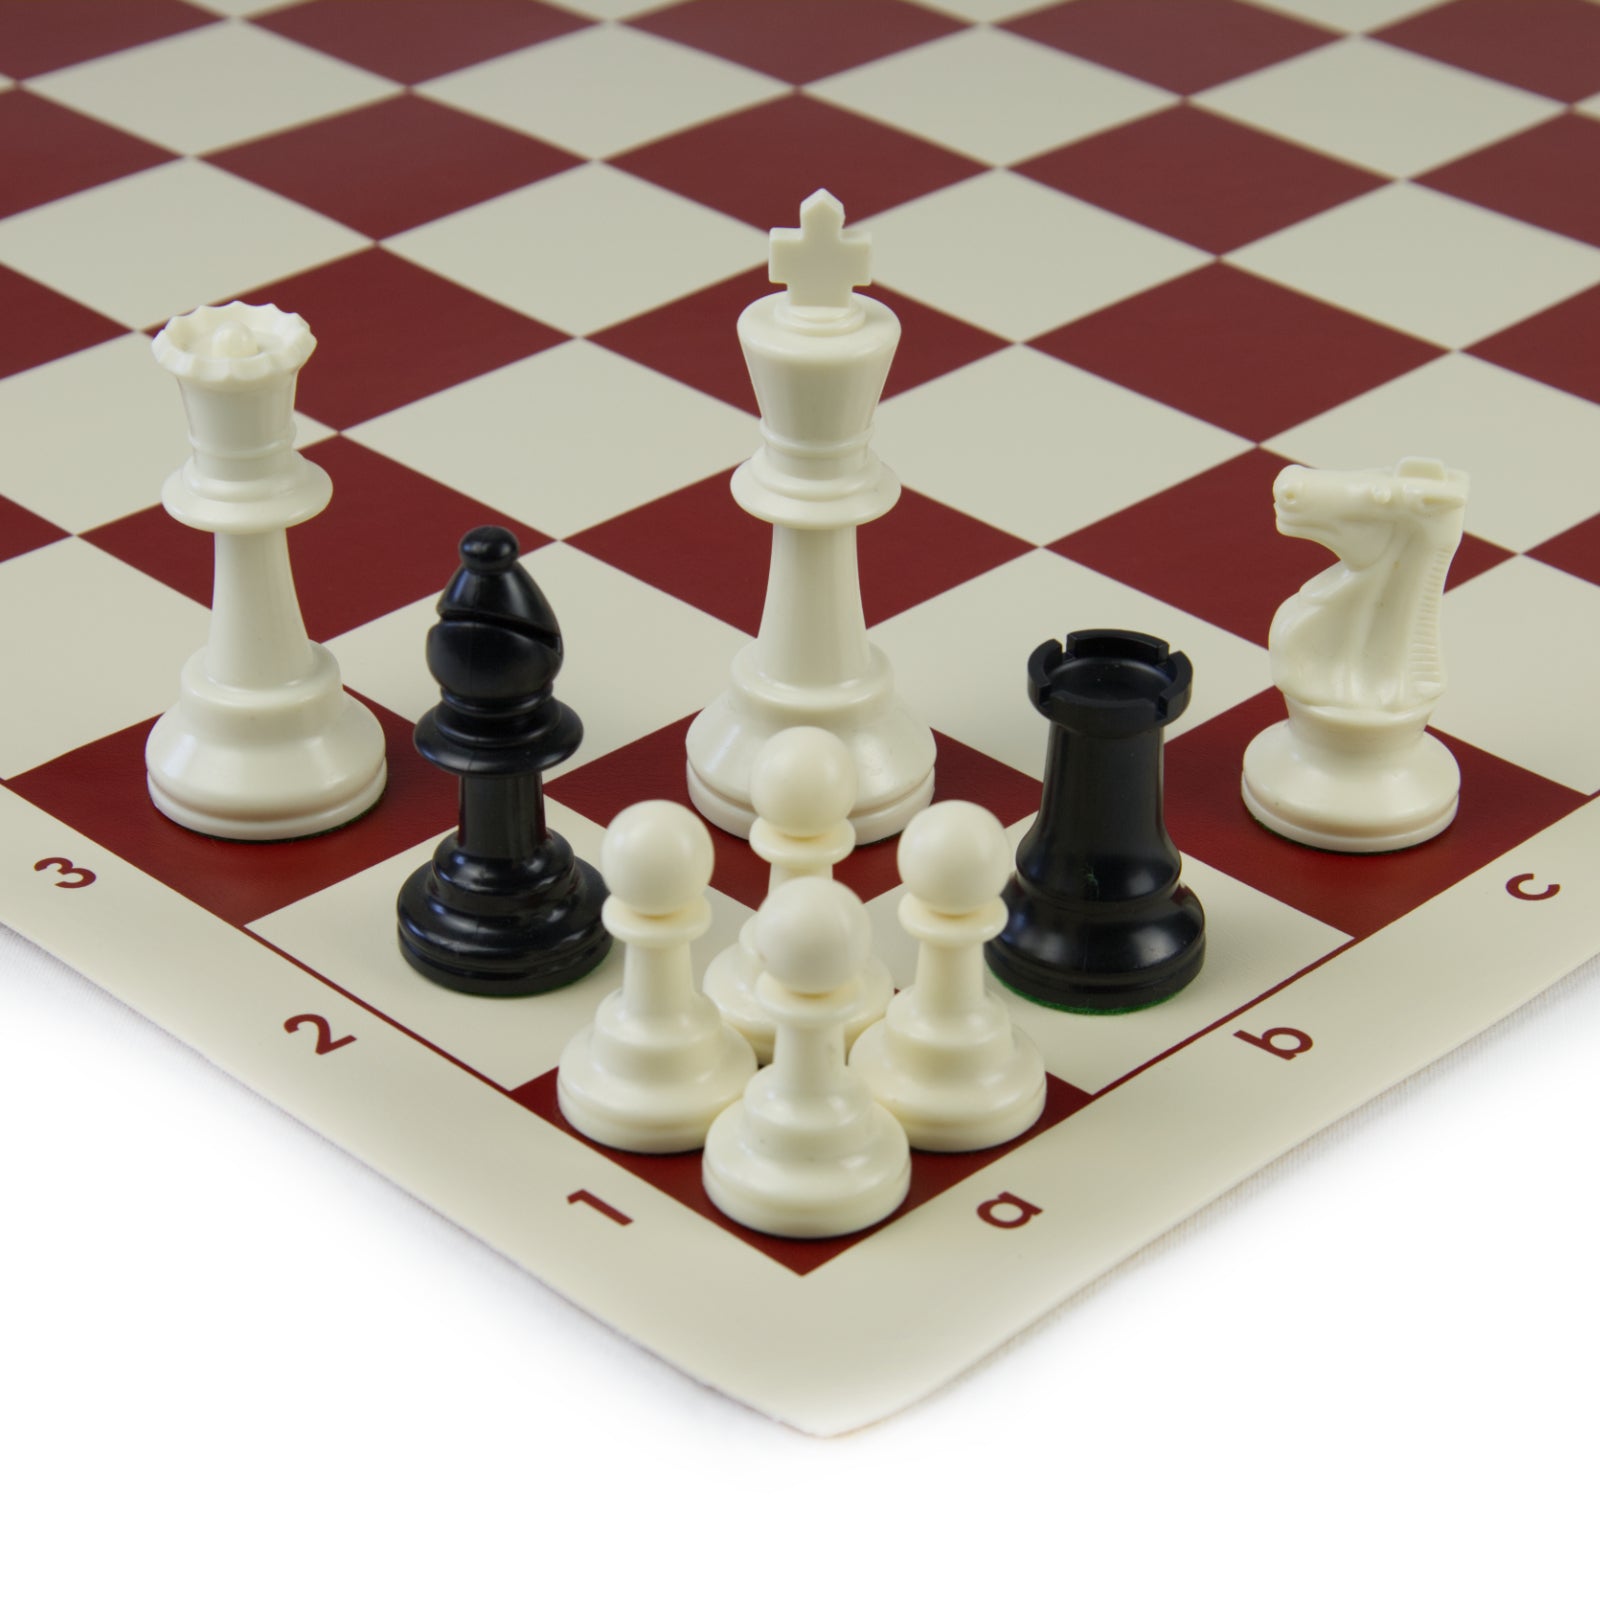 20" Tournament Vinyl Chess Board - Red